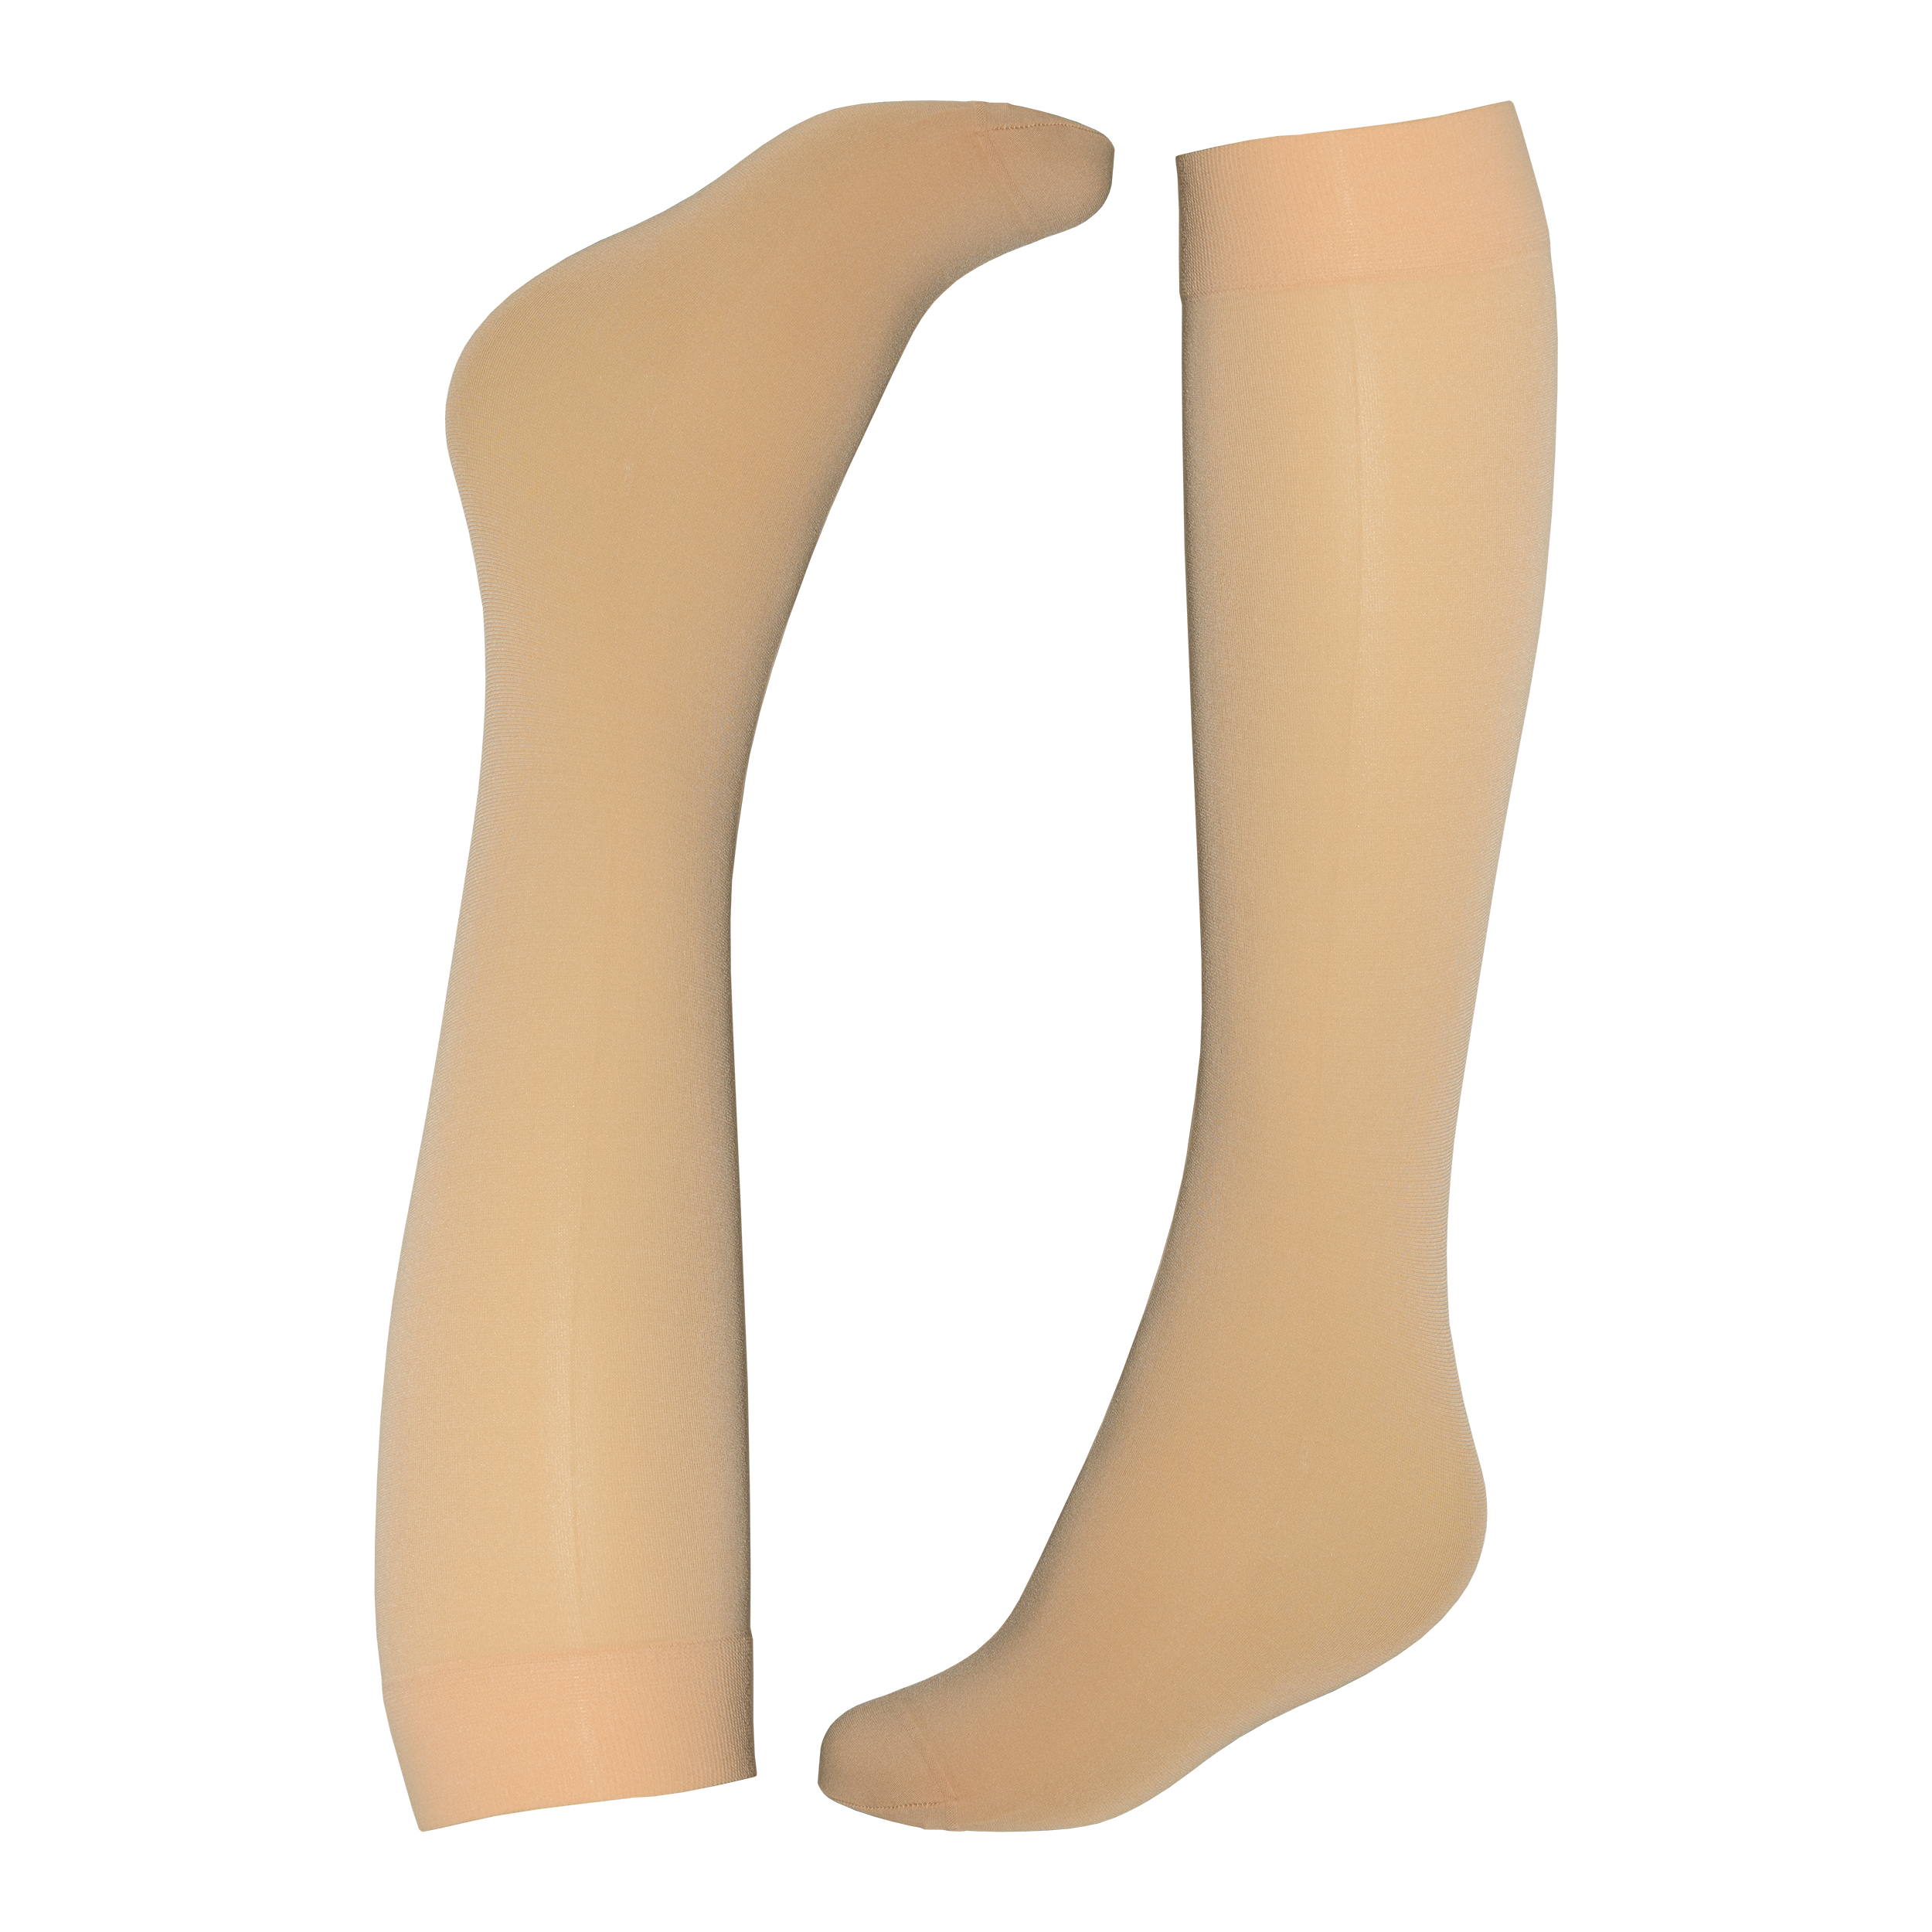 جوراب ساق بلند زنانه پریزن مدل سه ربع DEN70-K رنگ کرم